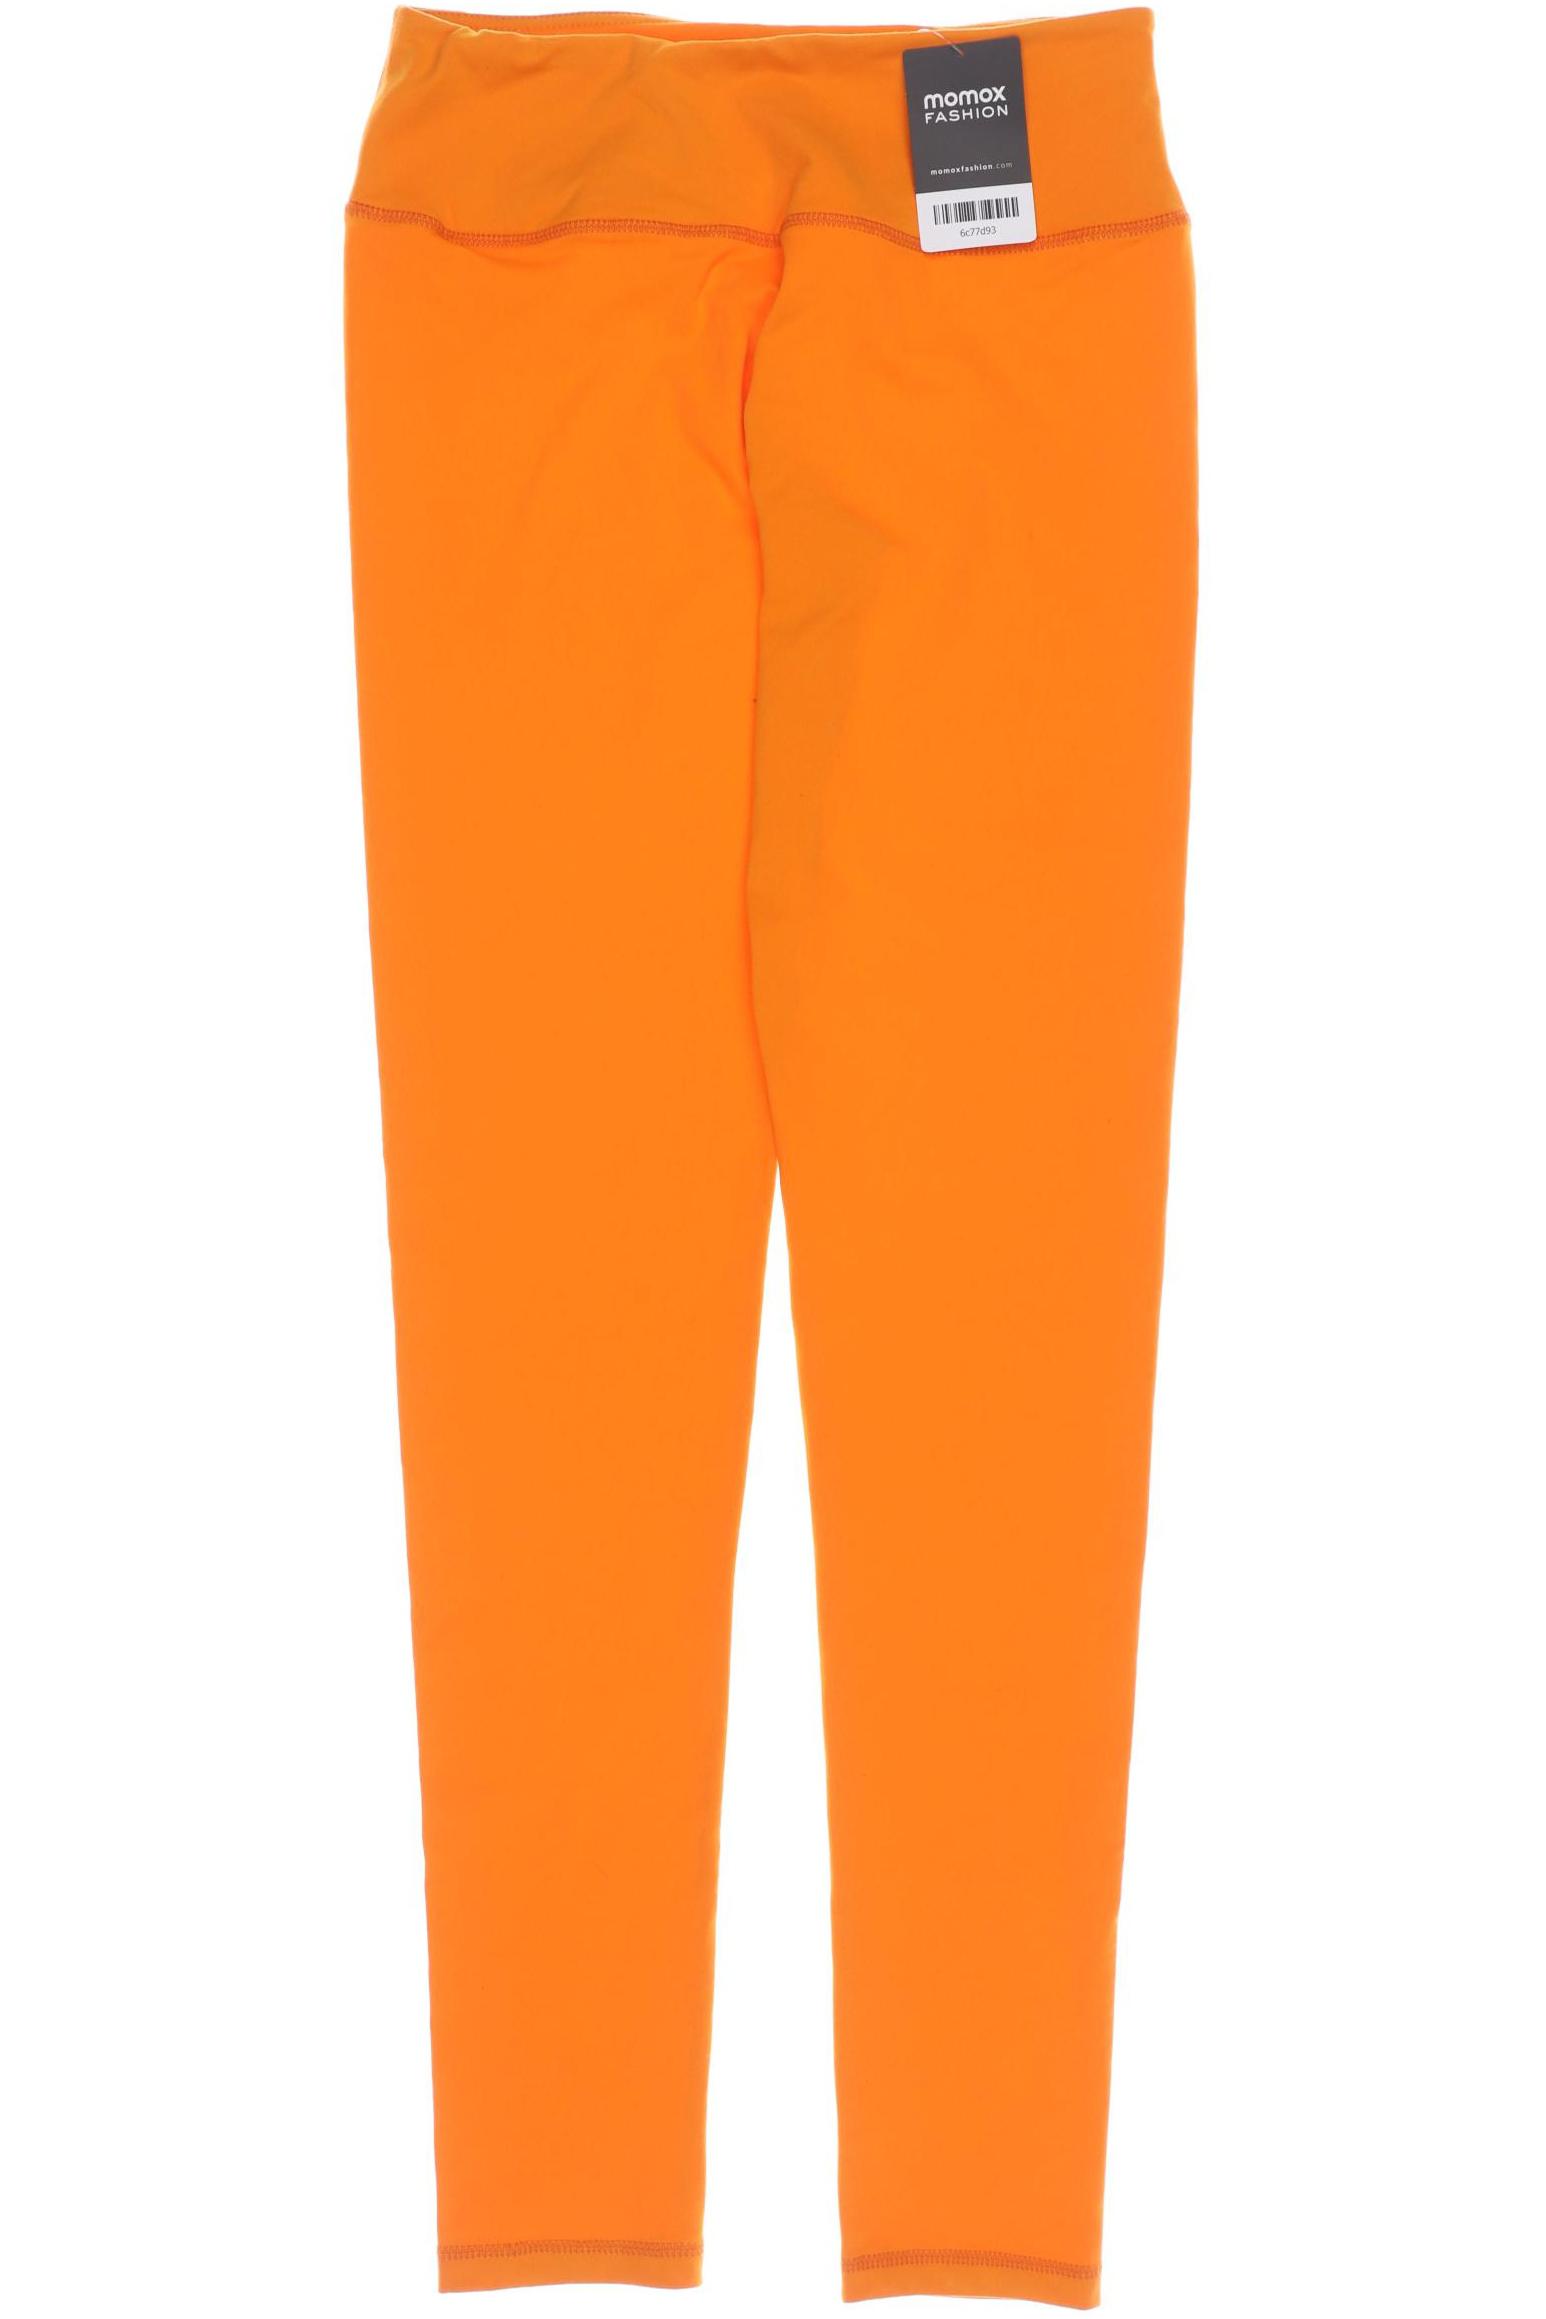 Lululemon Damen Stoffhose, orange, Gr. 8 von Lululemon